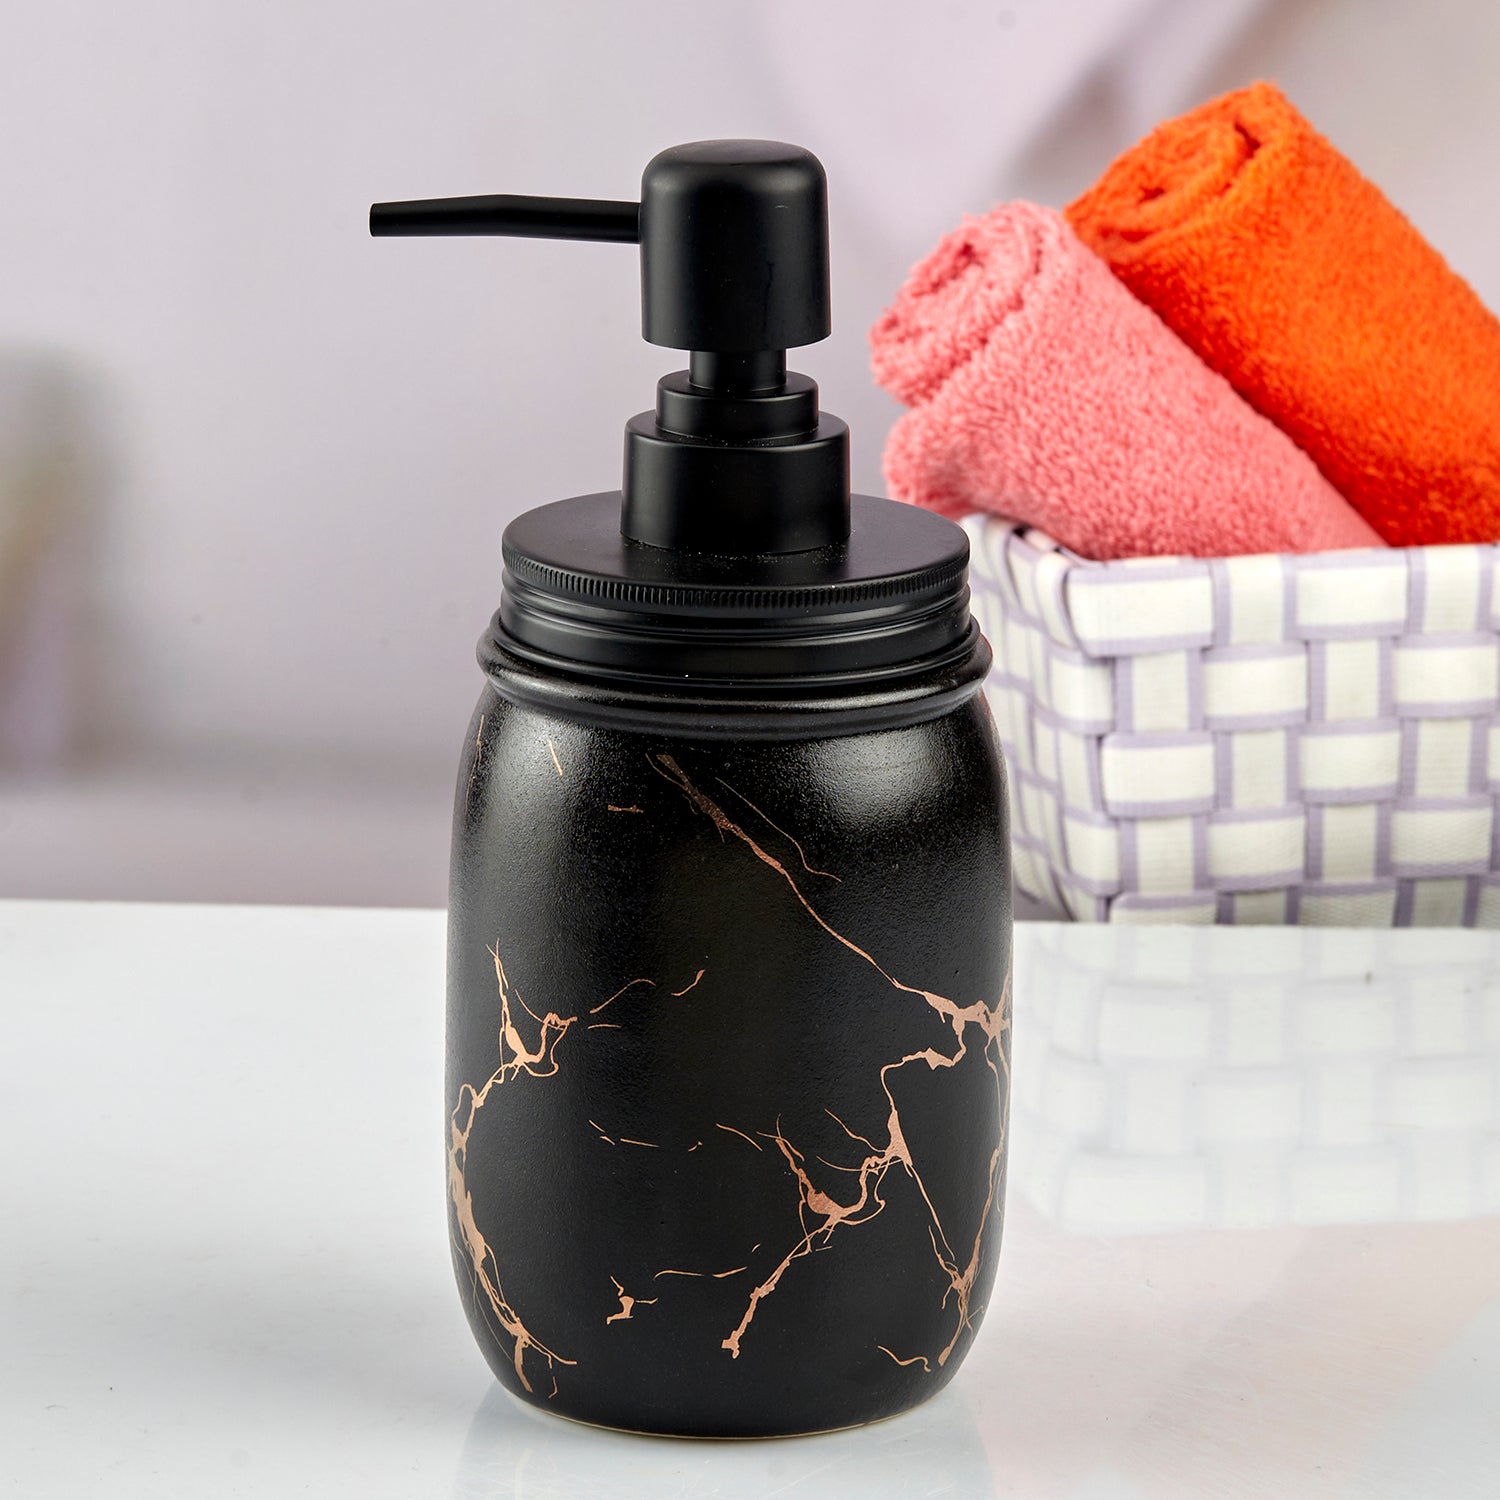 Ceramic Soap Dispenser handwash Pump for Bathroom, Set of 1, Black (10735)